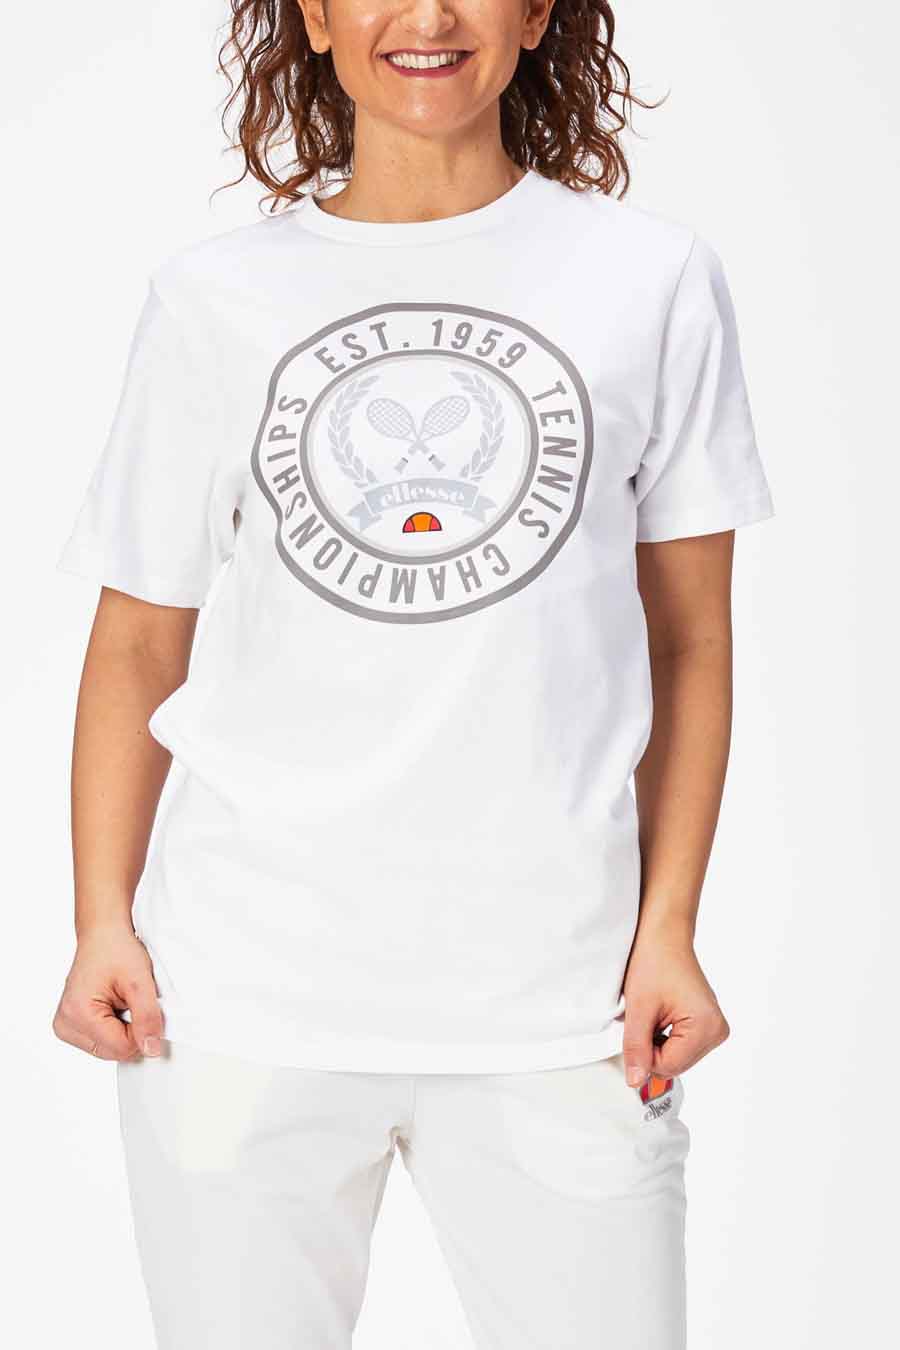 Voorbereiding vrede specificatie T-shirt (korte mouwen) Wit - ellesse® - SGM14175_908 WHITE | ZEB